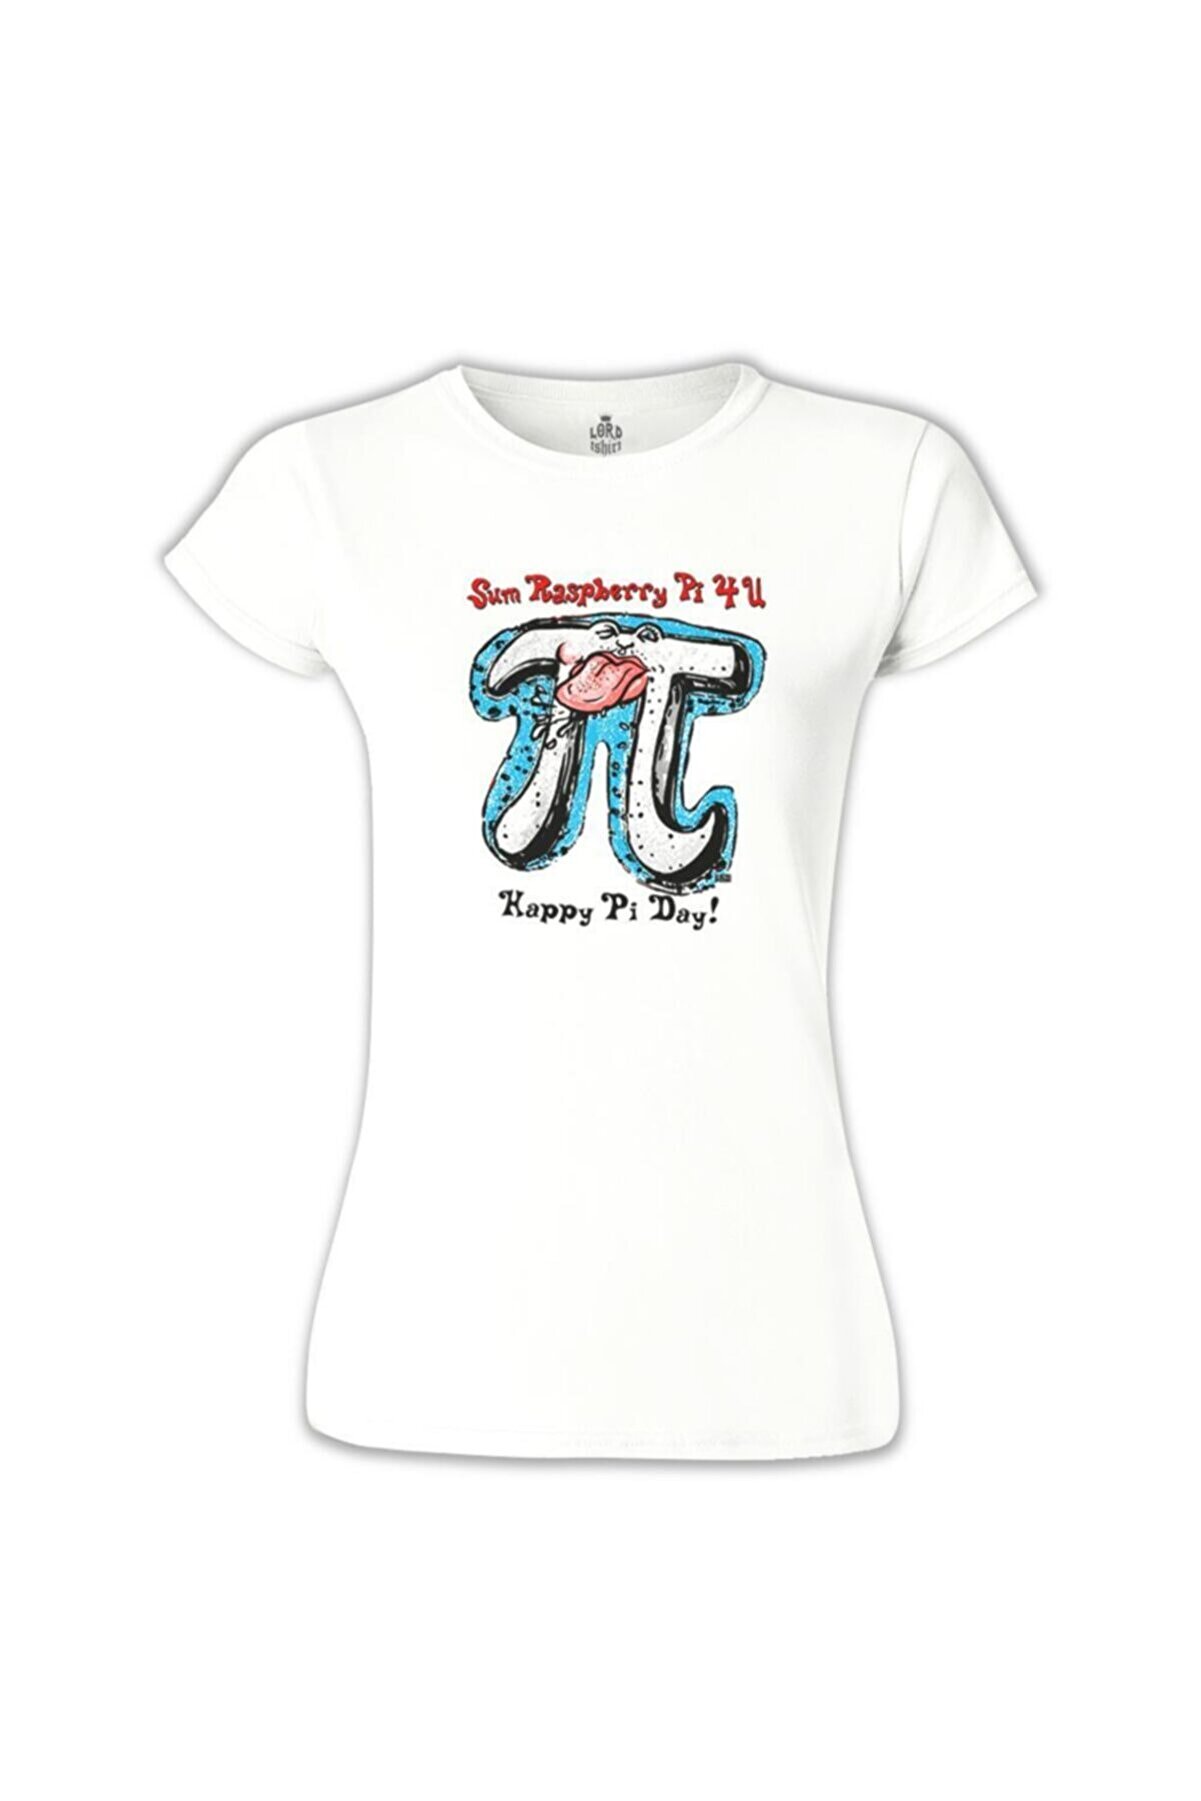 Lord T-Shirt Kadın Beyaz Matematik Pi 22 Tshirt - BB-635